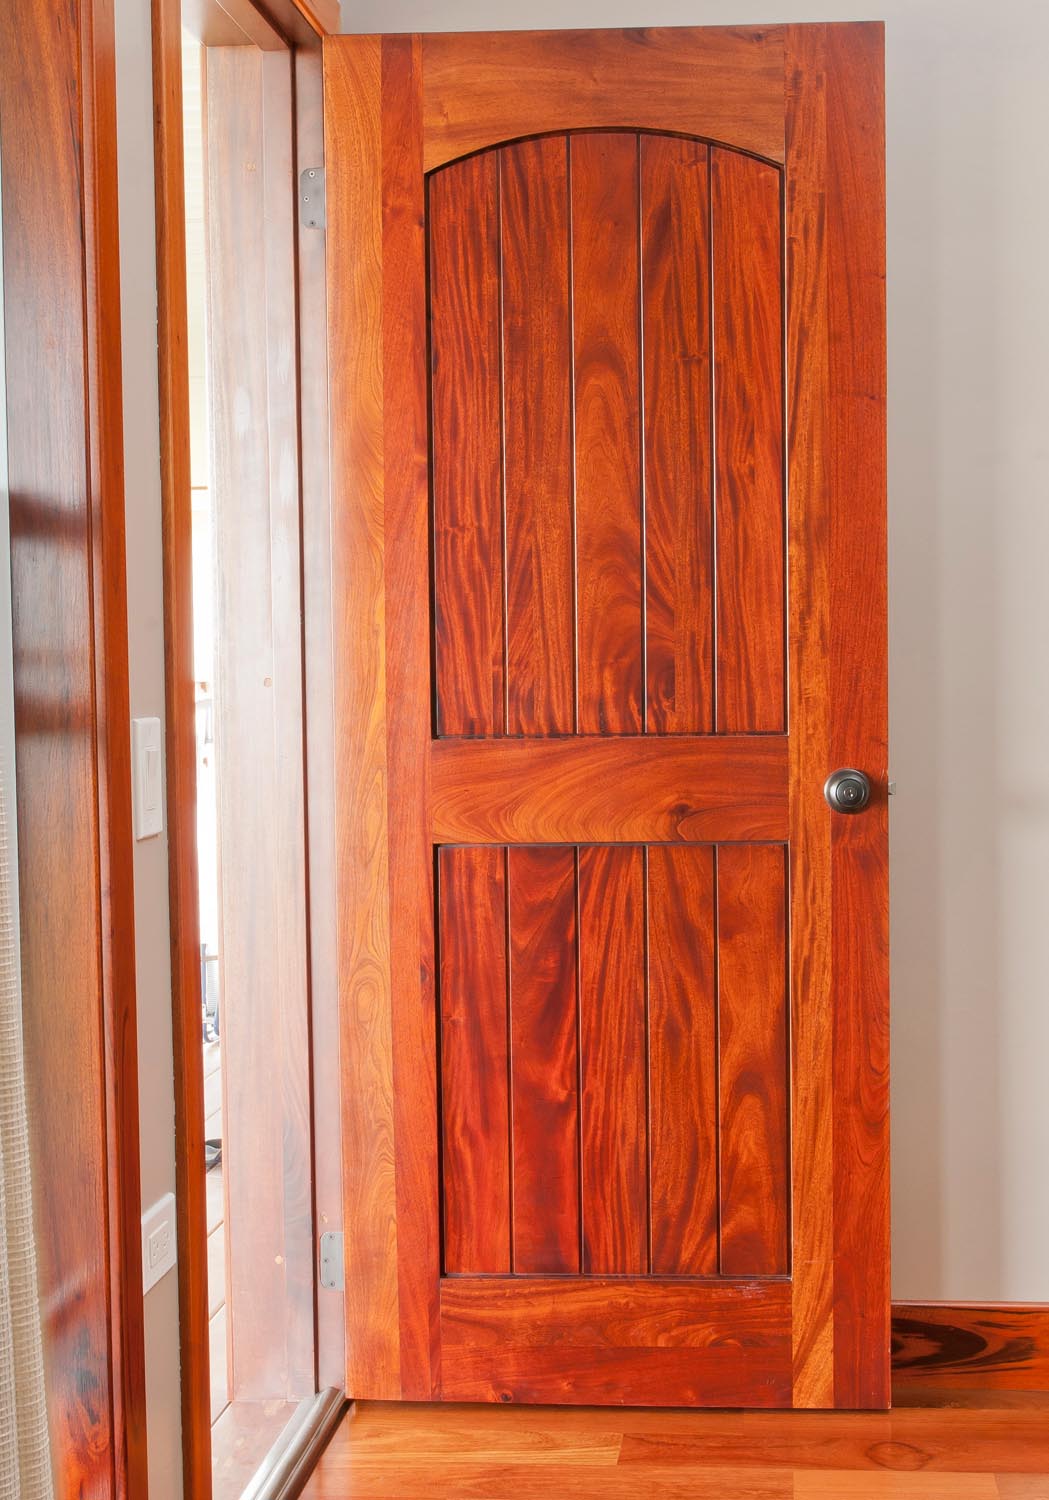 Figured mahogany, plank style, eyebrow arch panel top door.